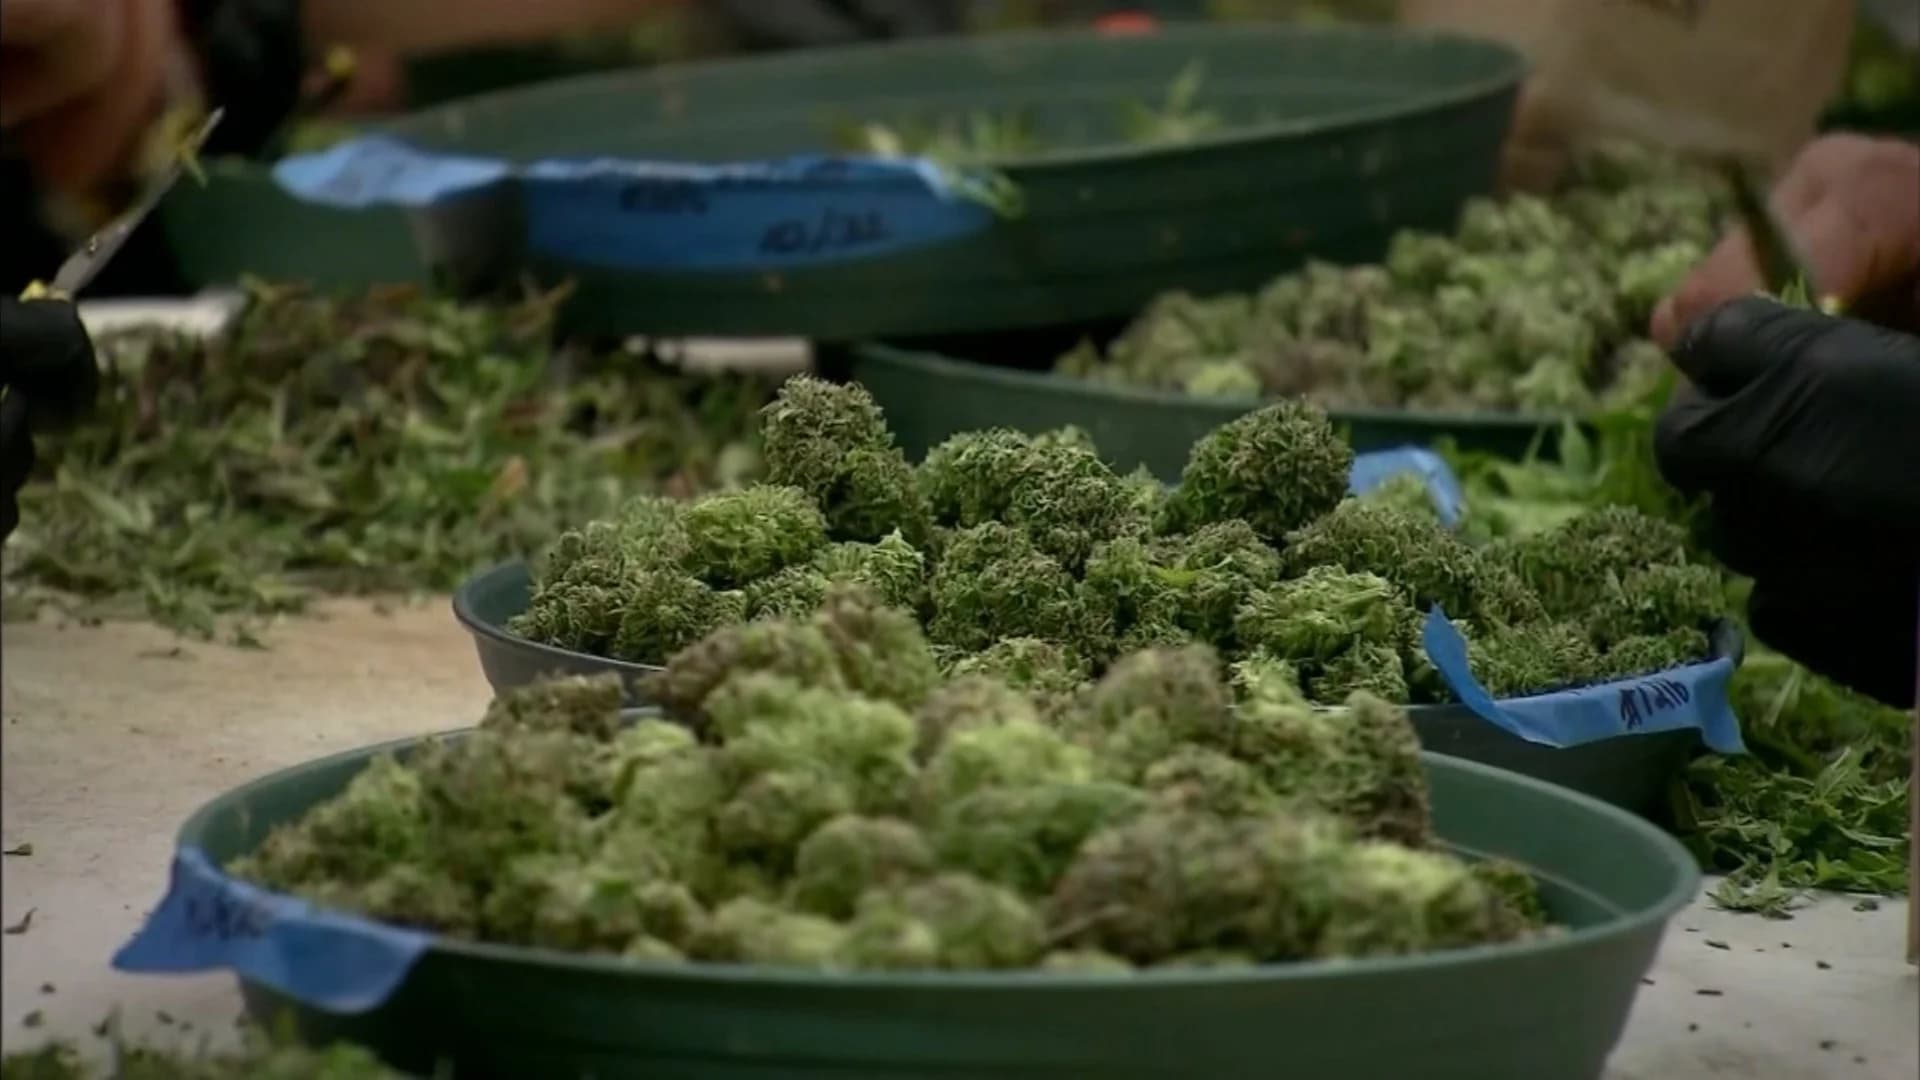 New Jersey's push to legalize recreational marijuana stalls